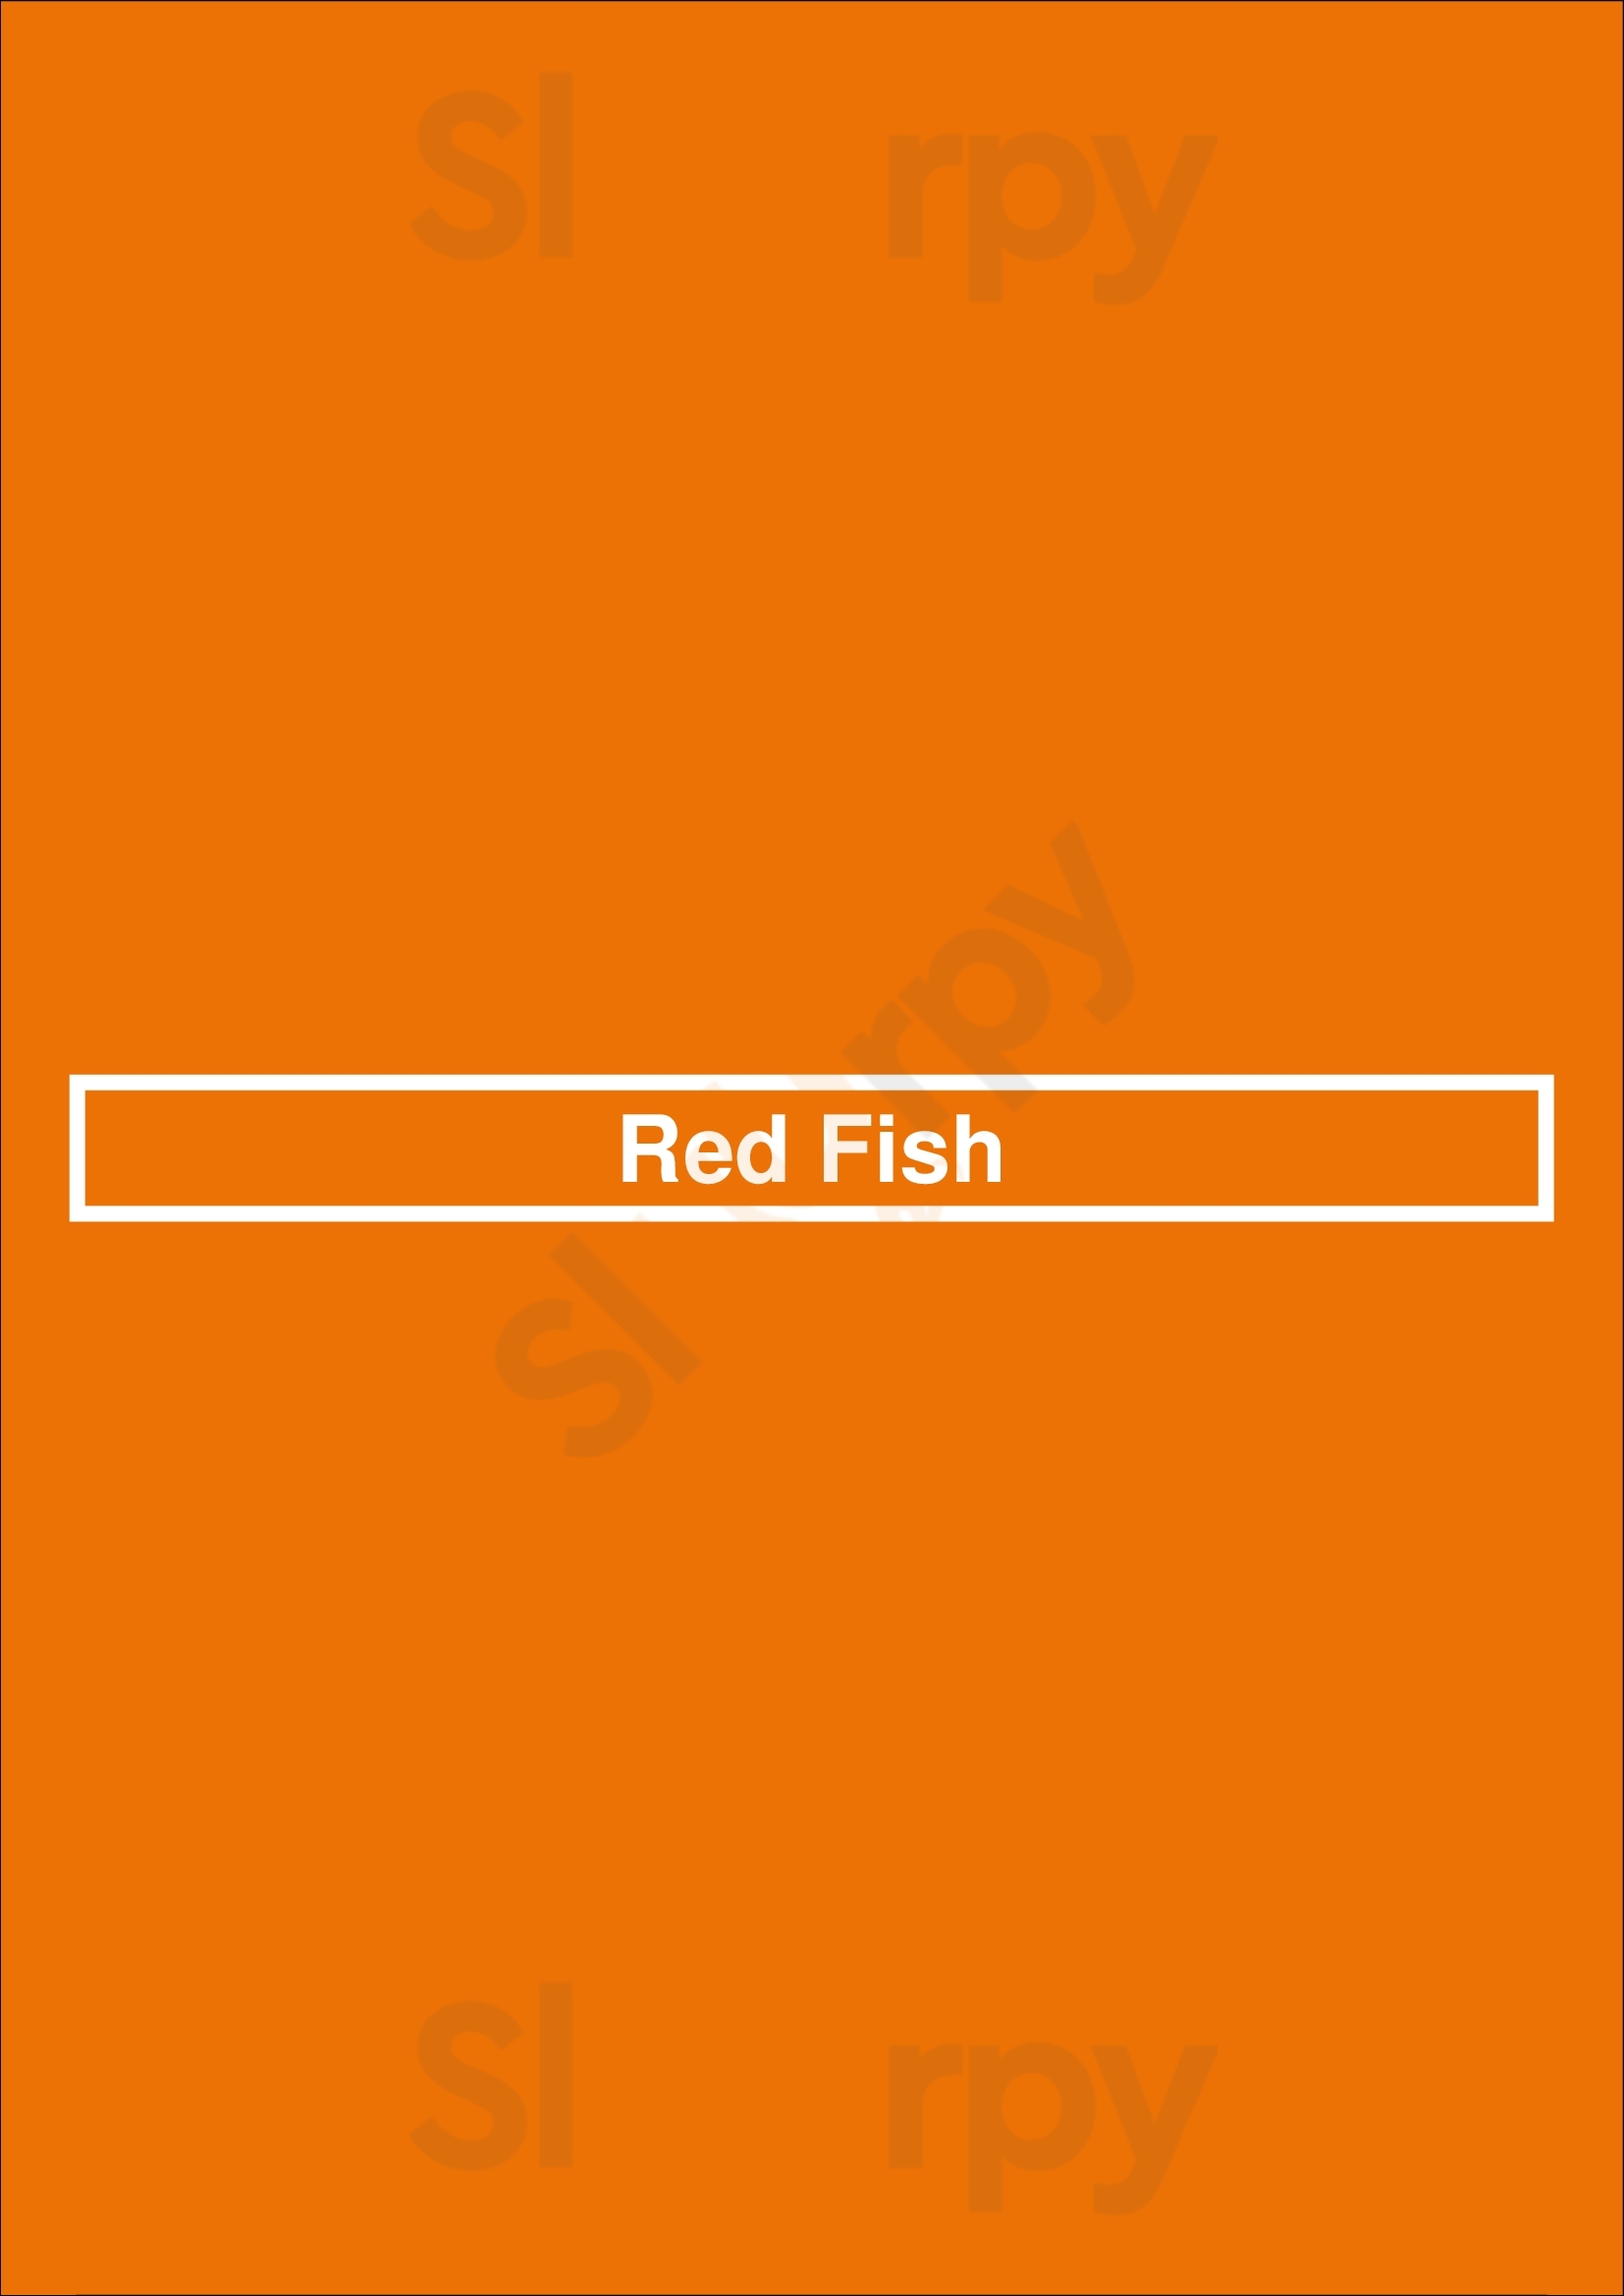 Red Fish Hilton Head Menu - 1